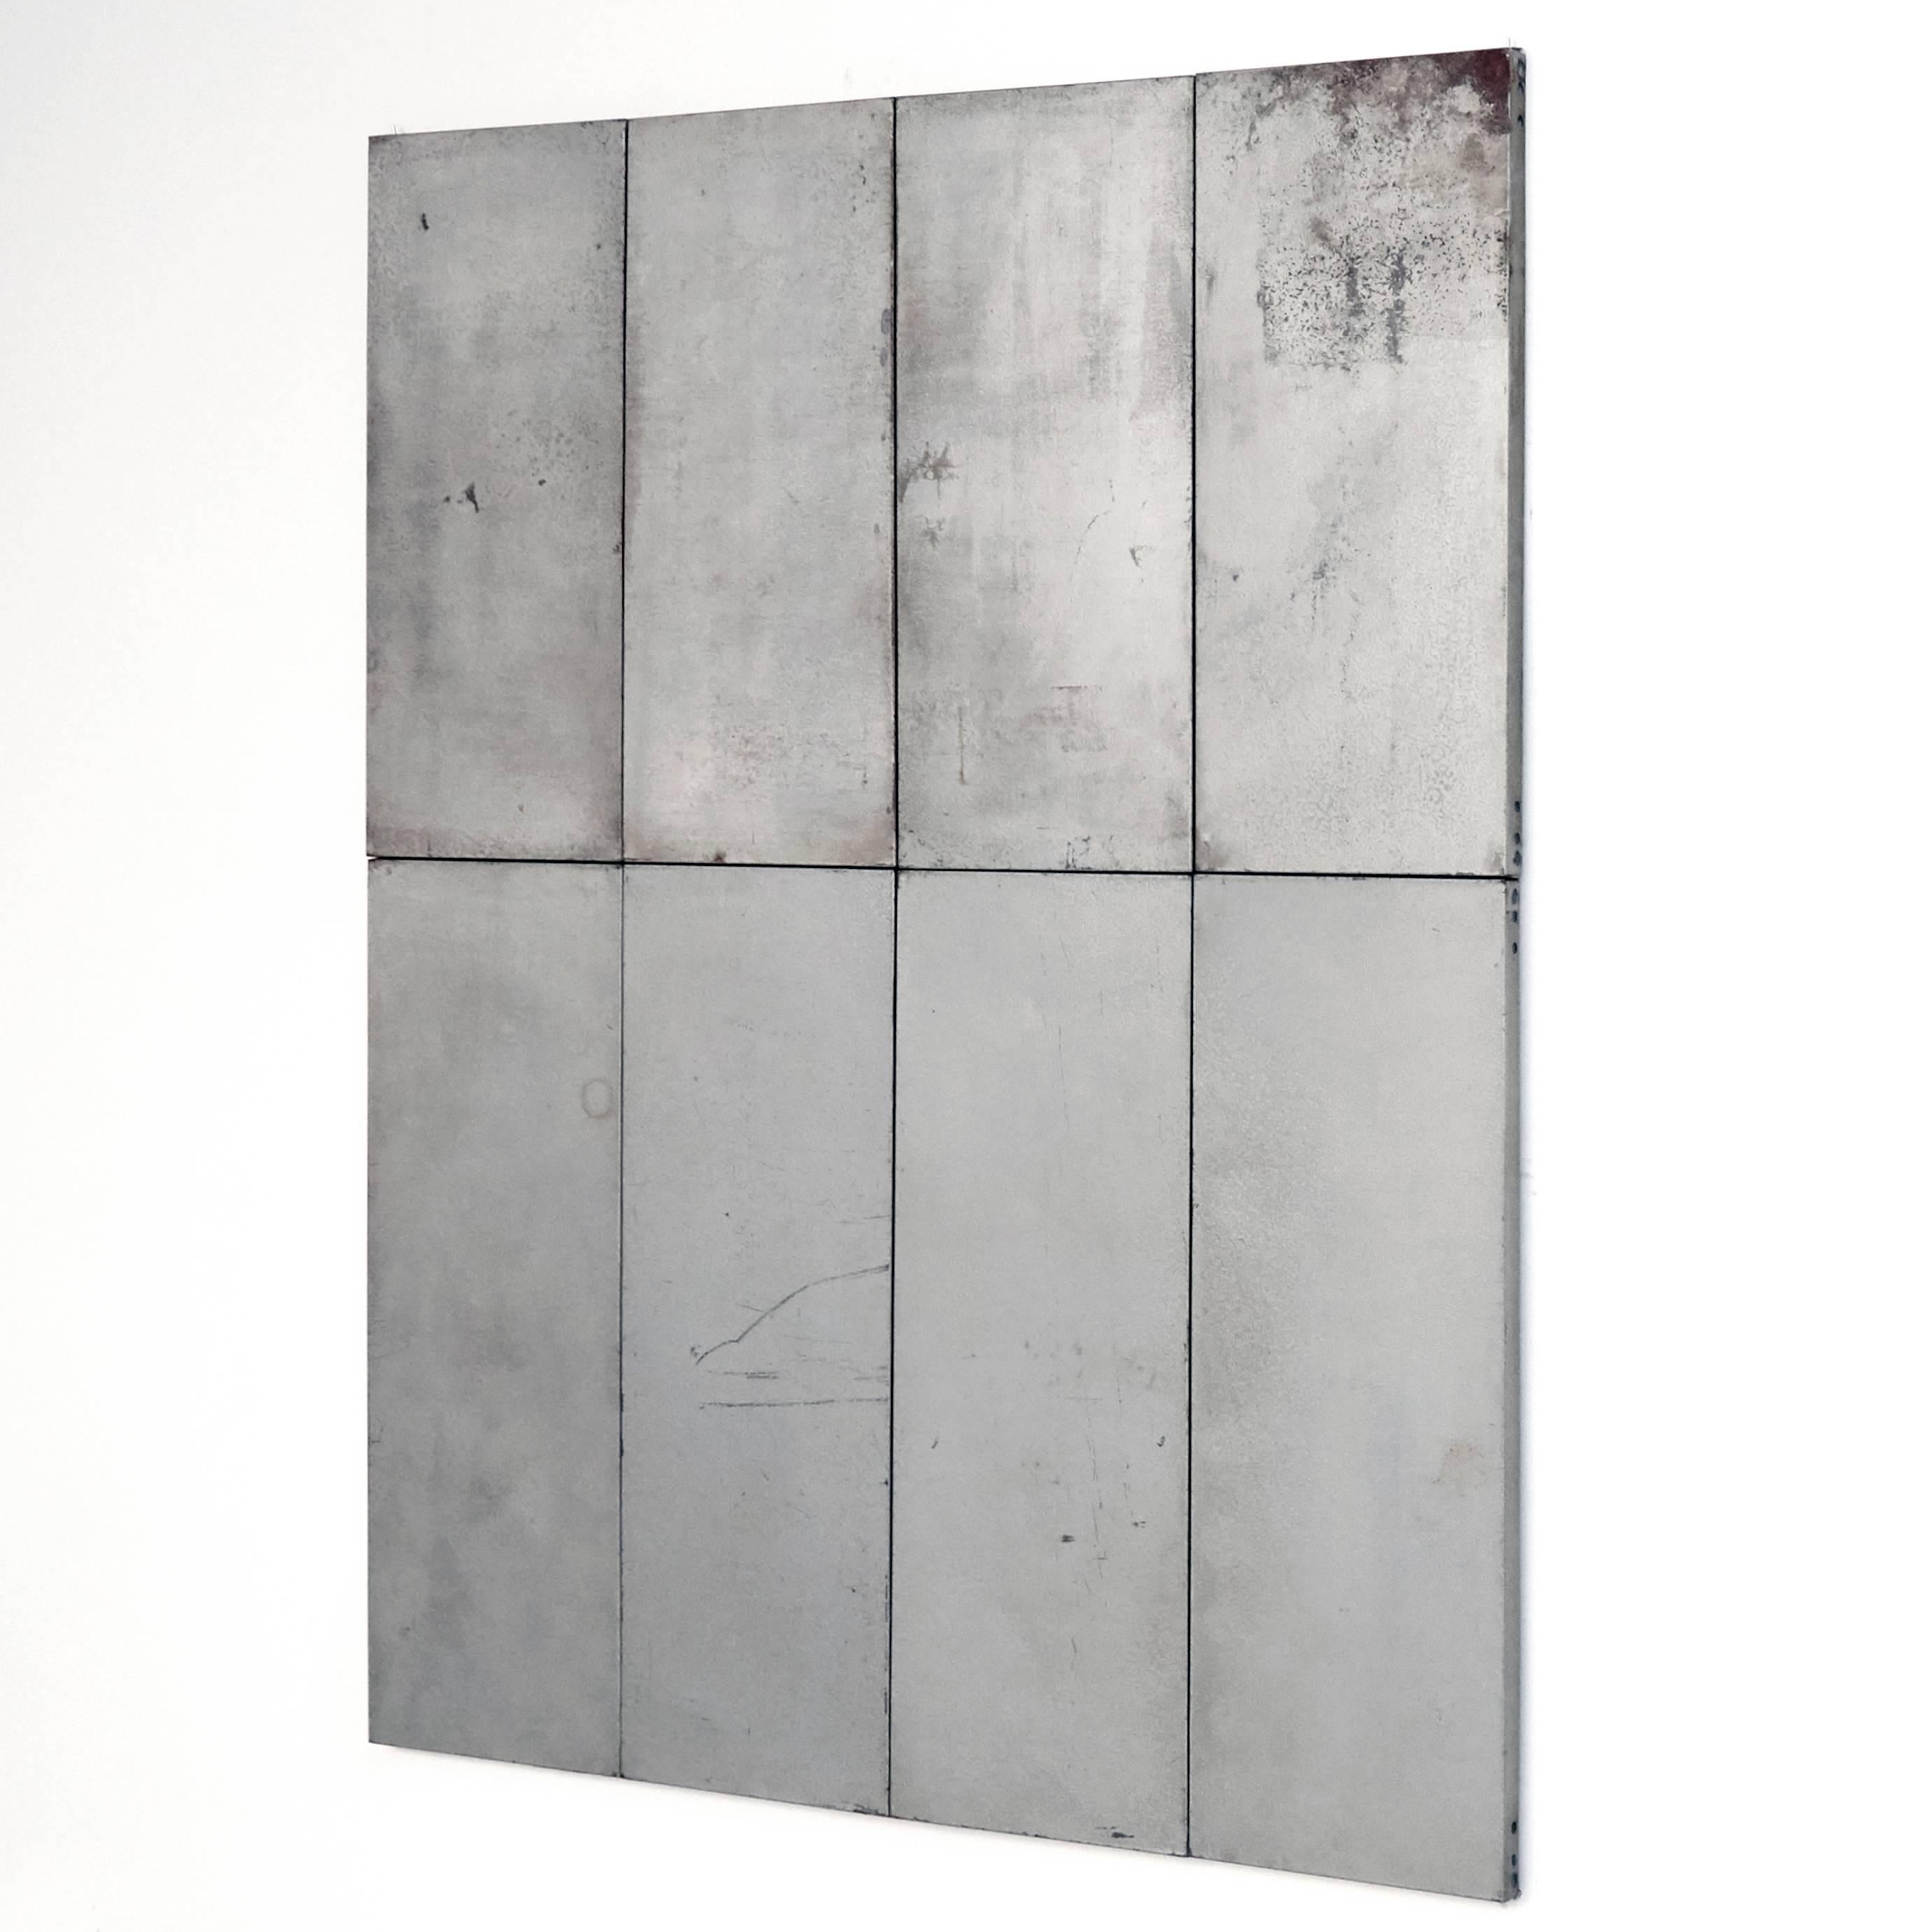 Spanish Ramon Horts Contemporary Metal Minimalism Artwork 4X2 For Sale